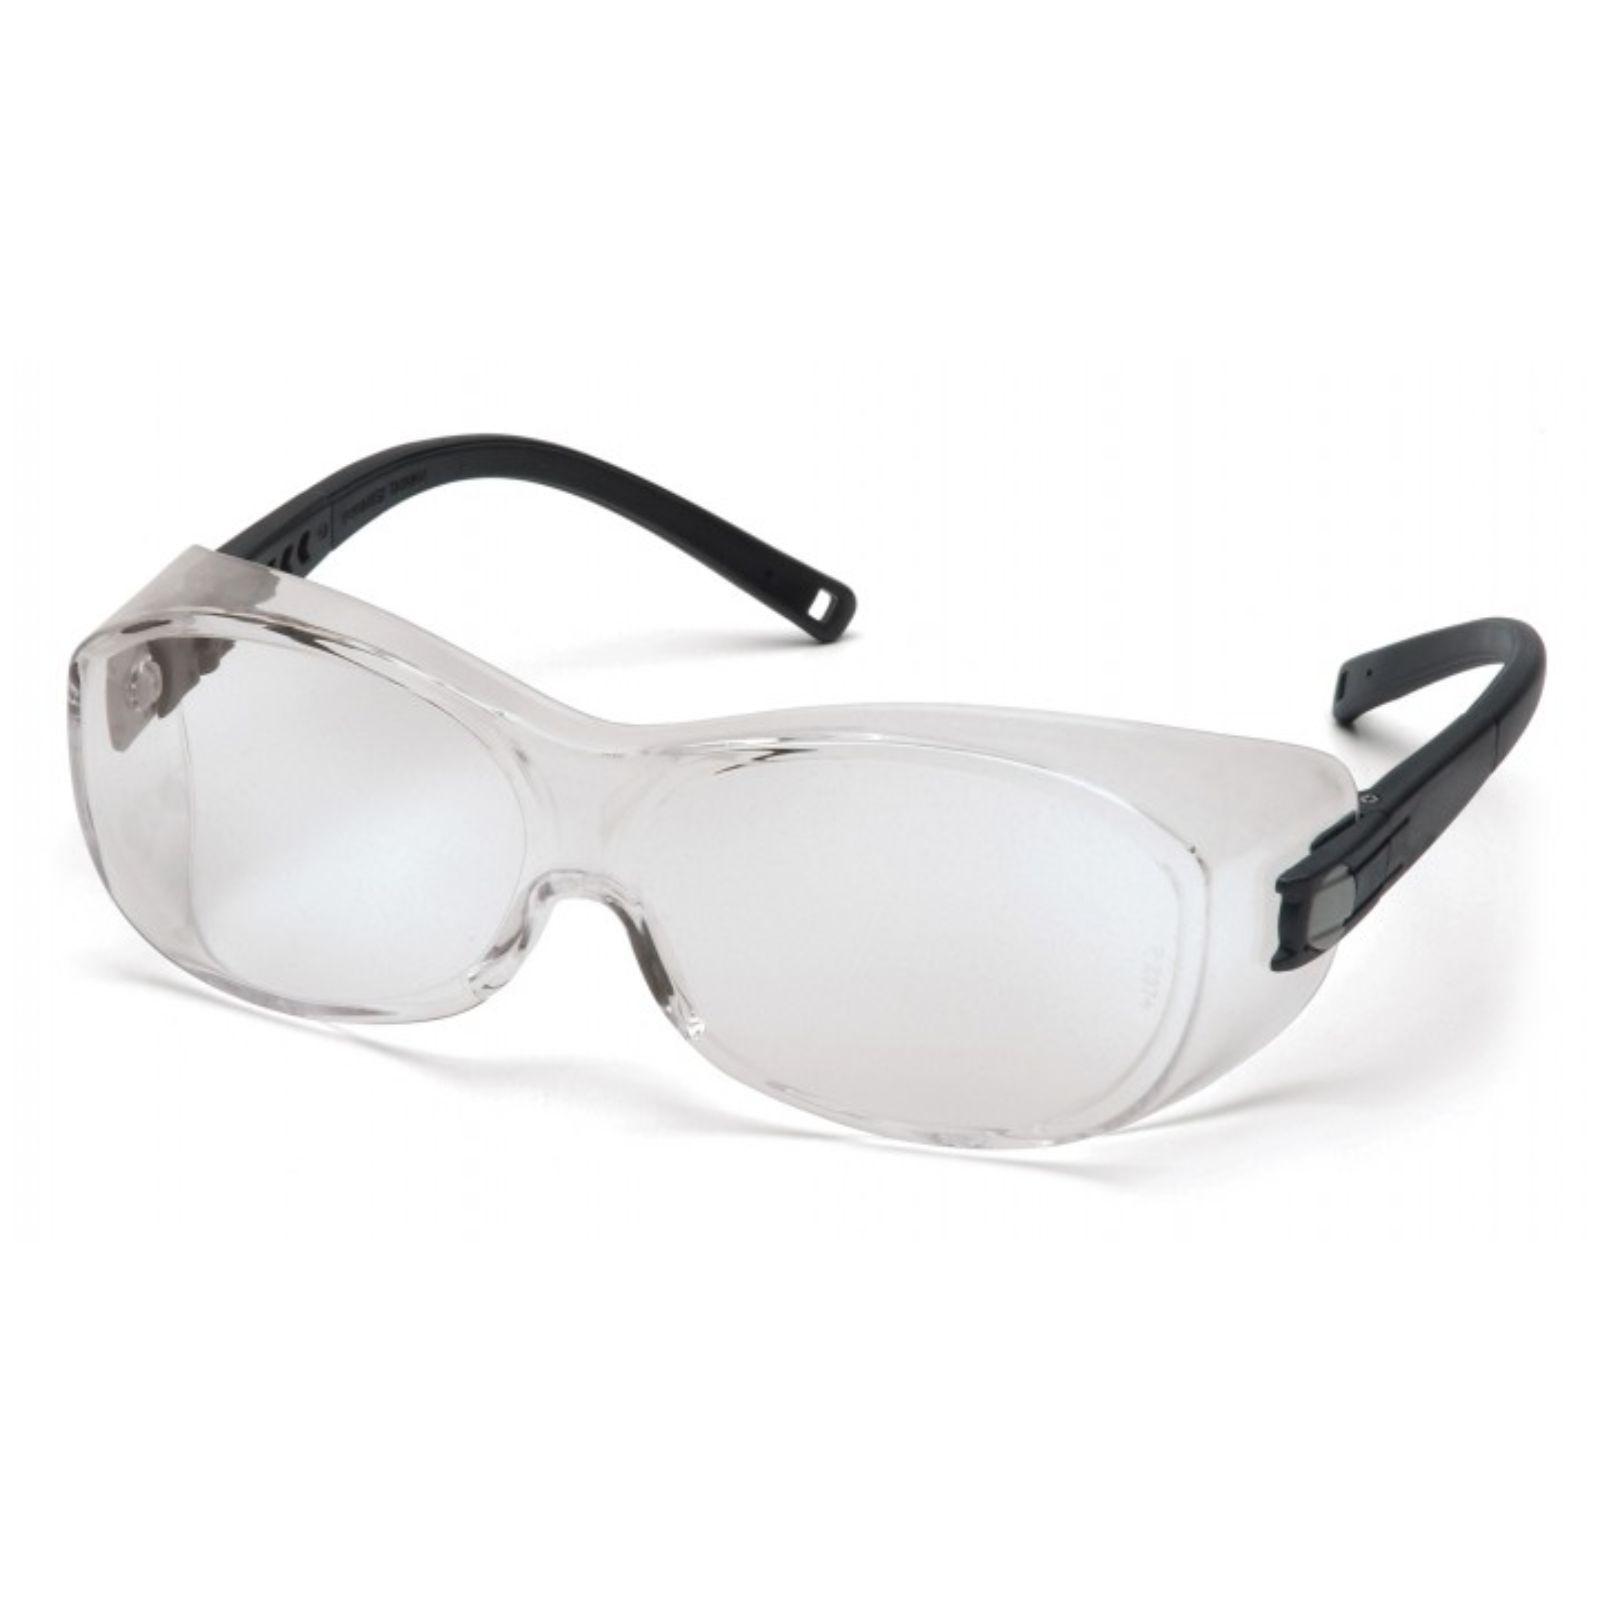 Pyramex OTS Safety Glasses Black Frame Clear Lens